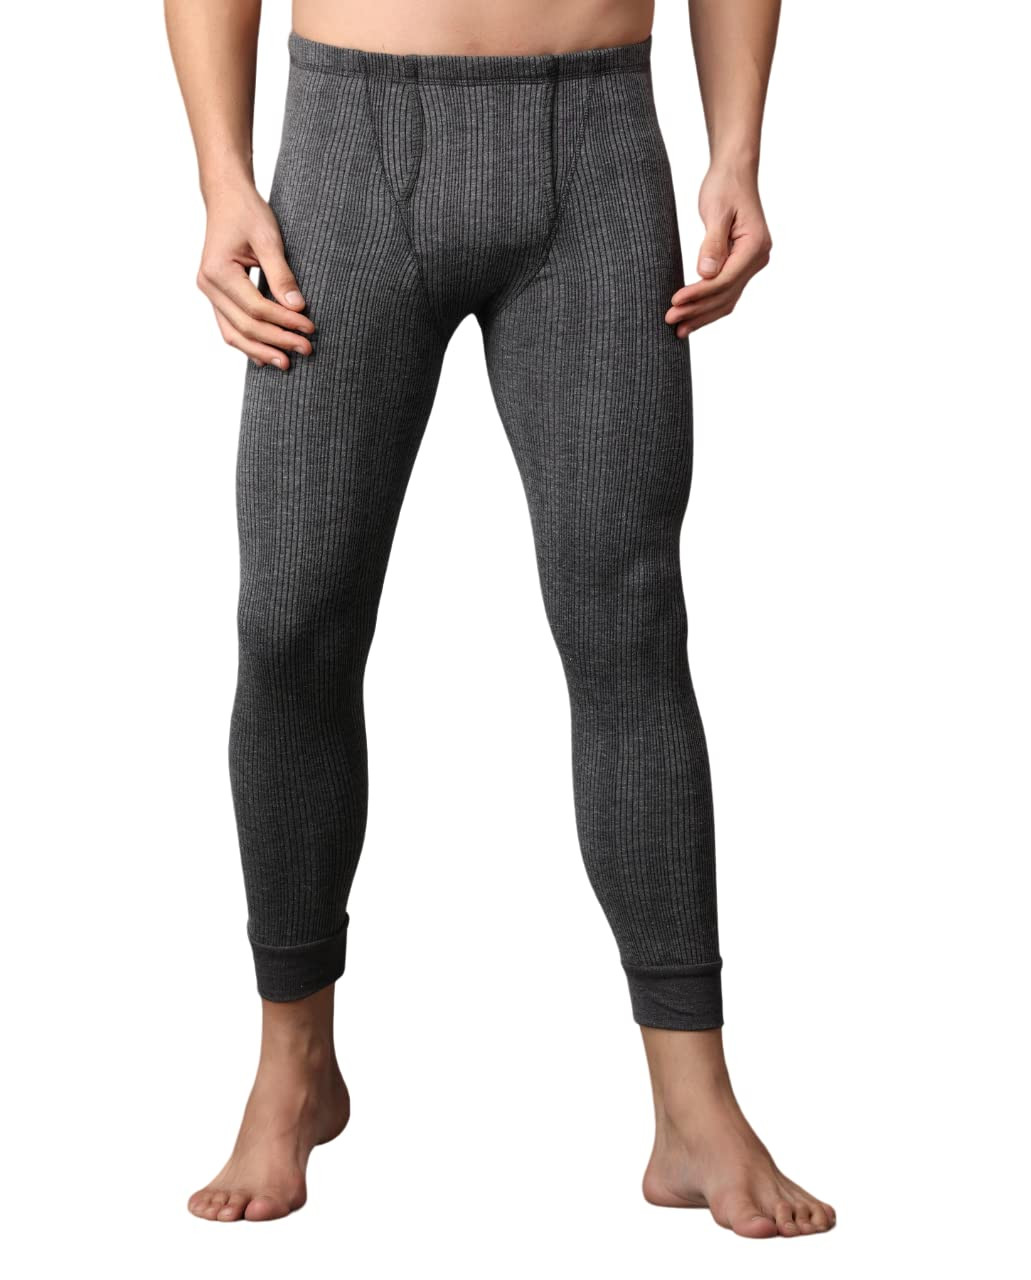 https://www.fastemi.com/uploads/fastemicom/products/wearslim-premium-winter-thermal-bottom-underwear-for-men--ultra-soft-winter-warmer-inner-wear-johns-pant-lower-blacksize-xl-266604574911638_l.jpg